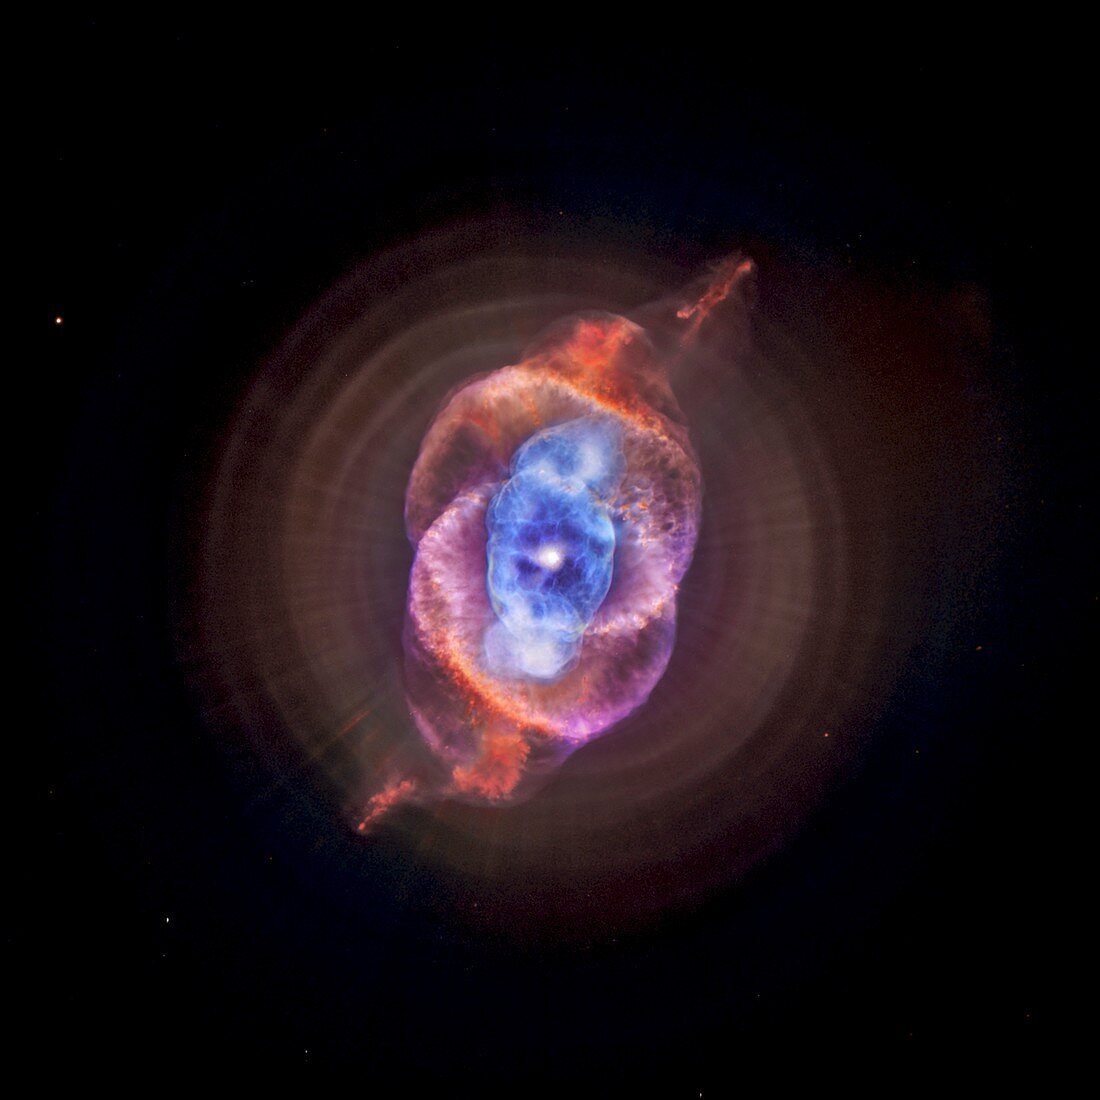 Cat's eye planetary nebula